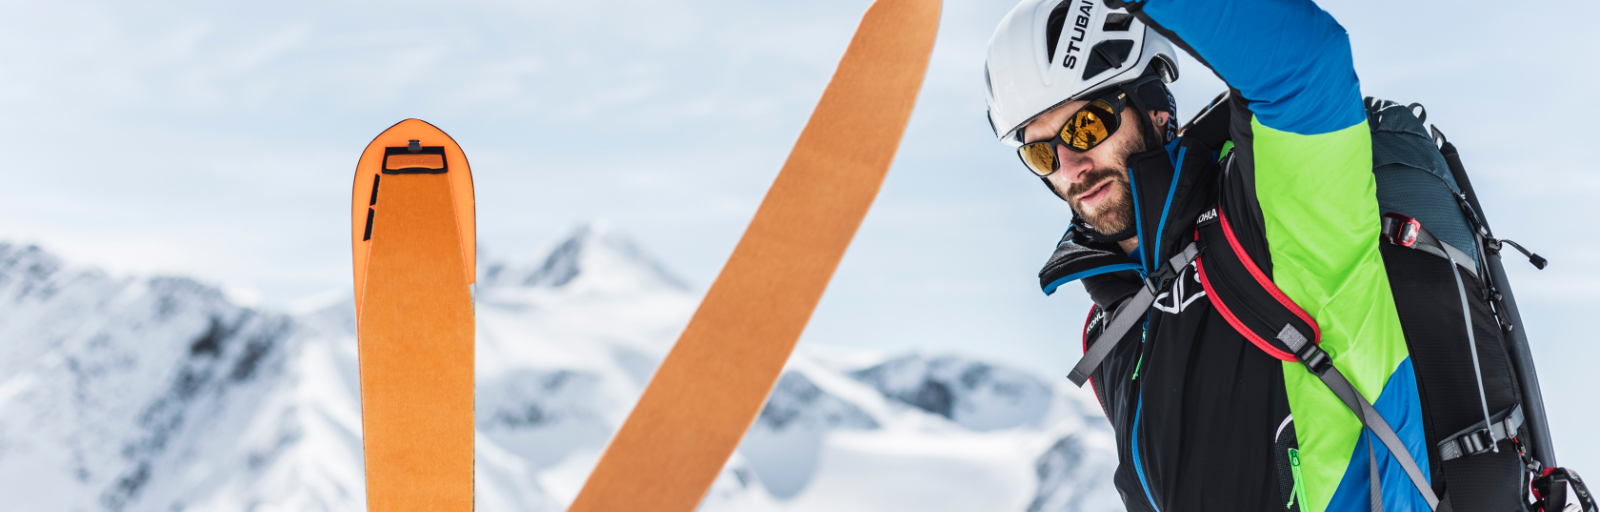 KOHLA Alpinist Steigfell am Ski